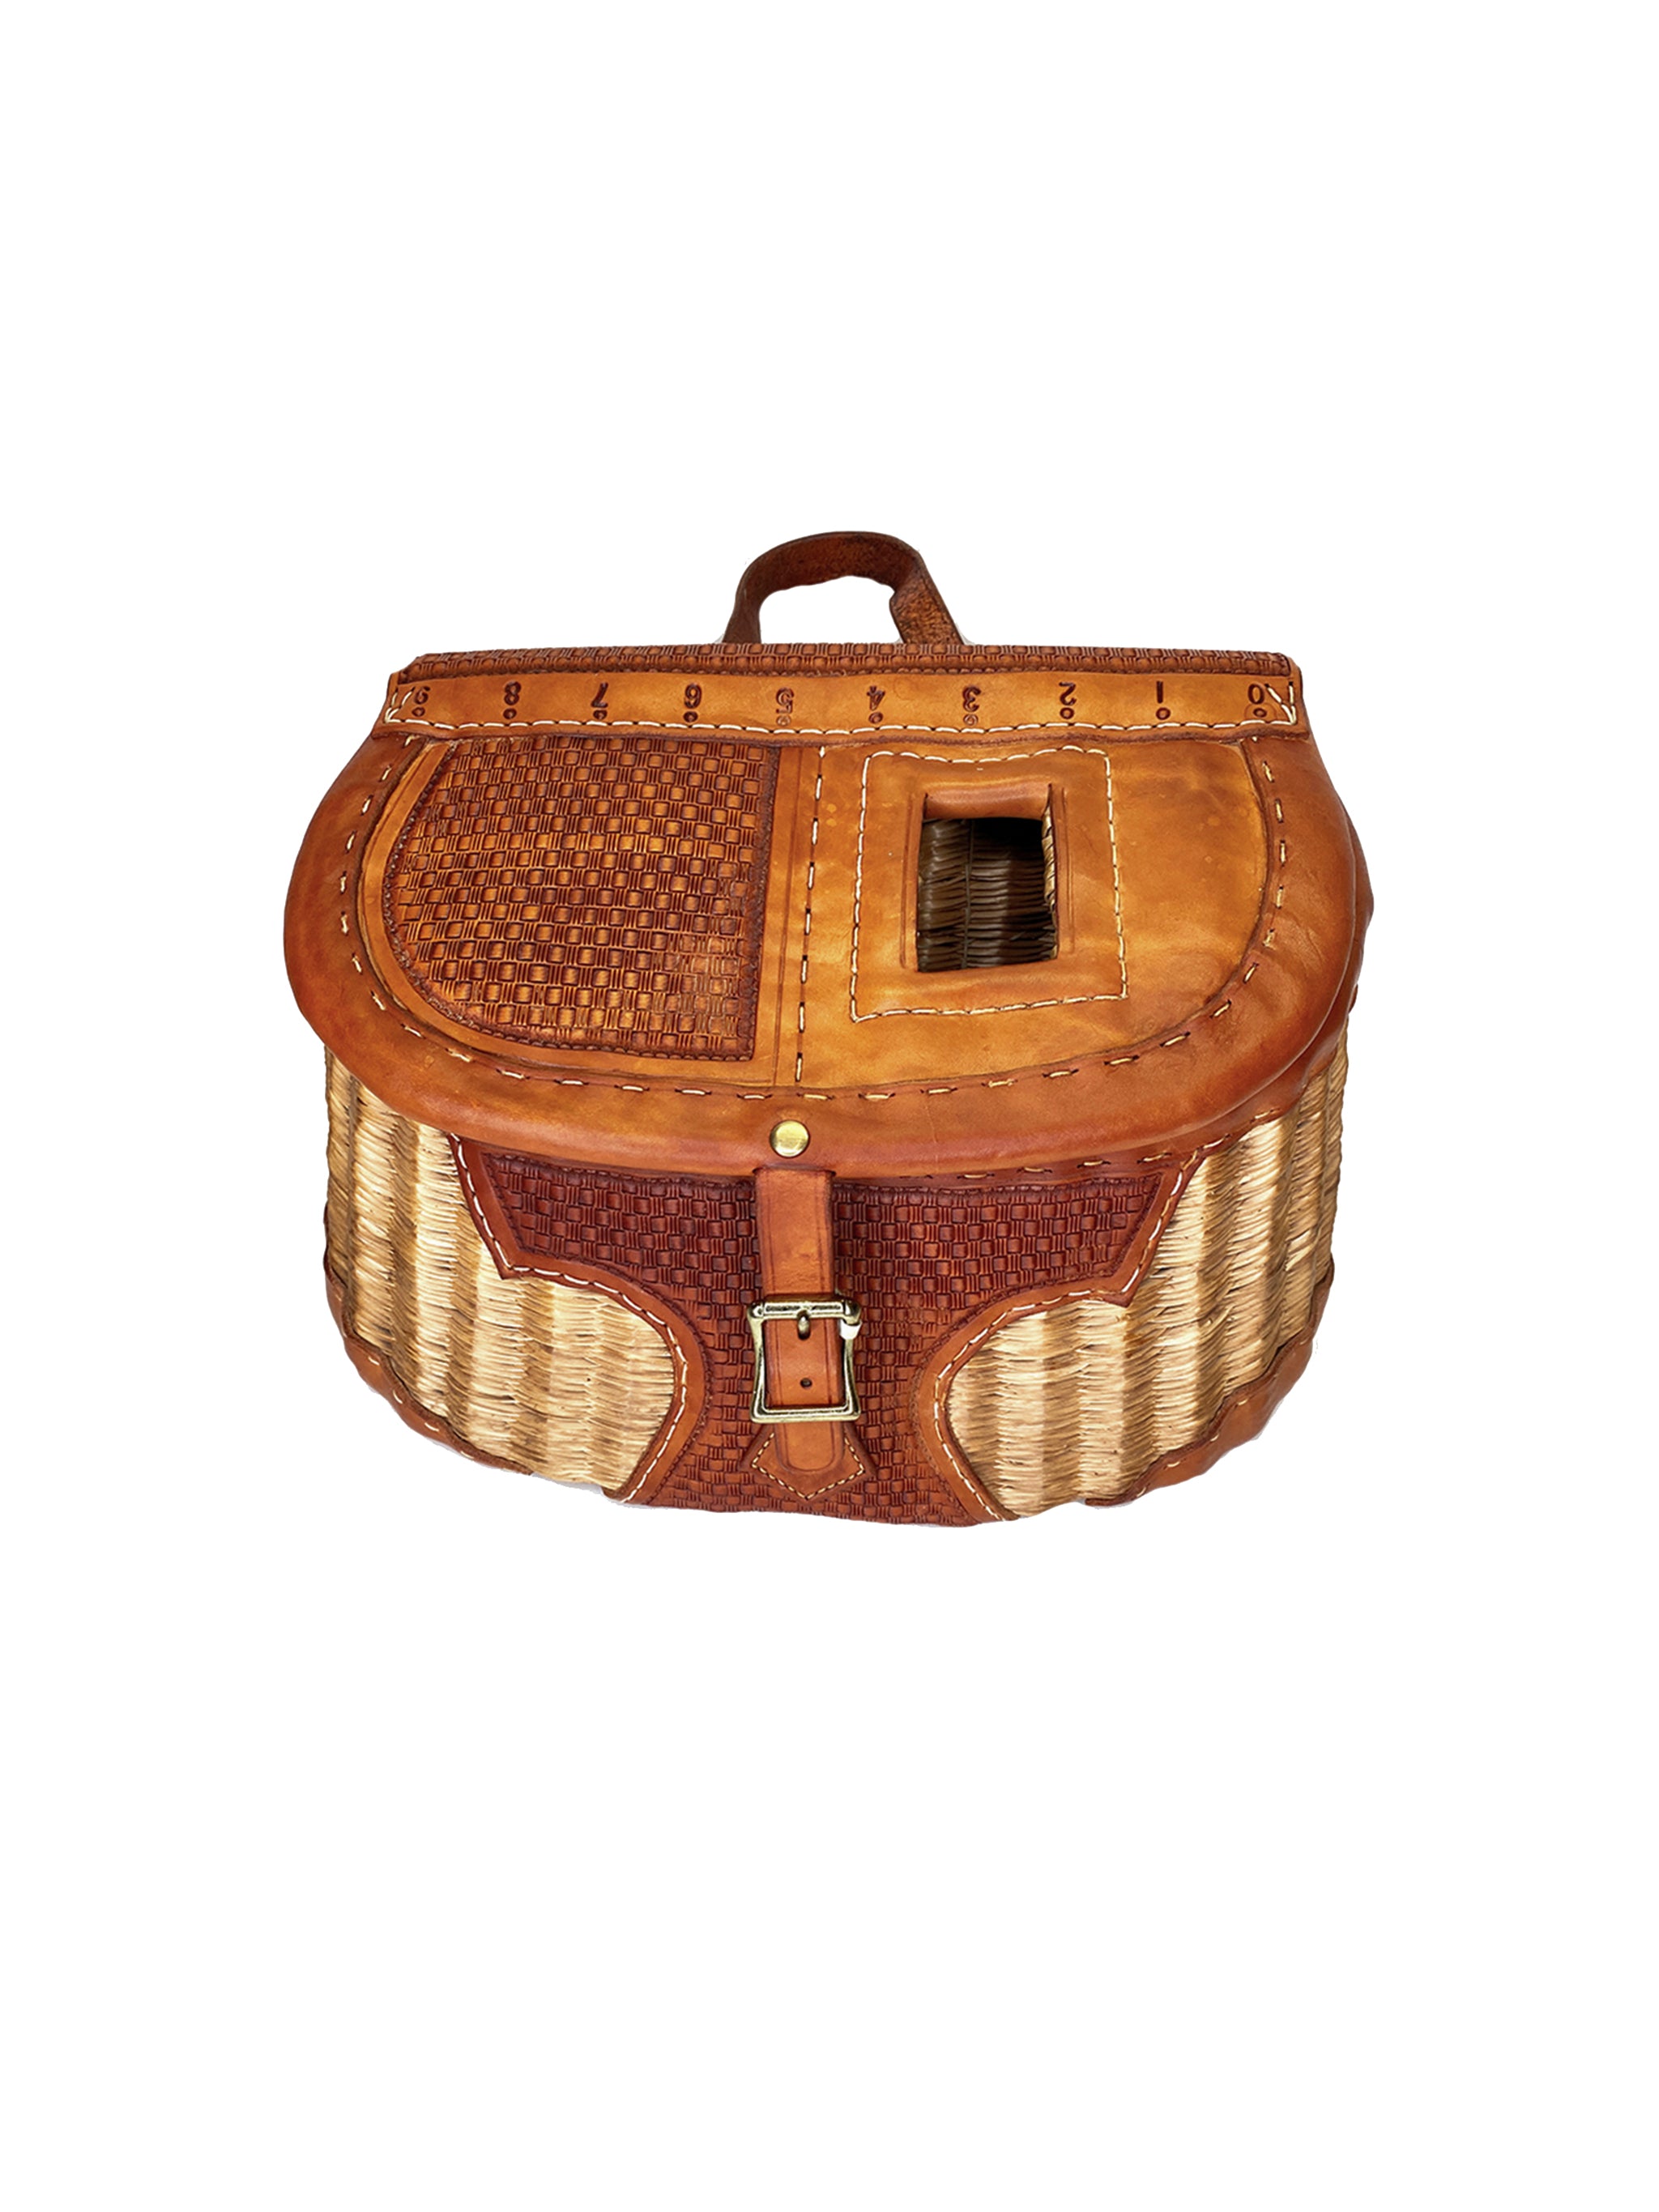 2) Vintage Wicker Fishing Creel Baskets